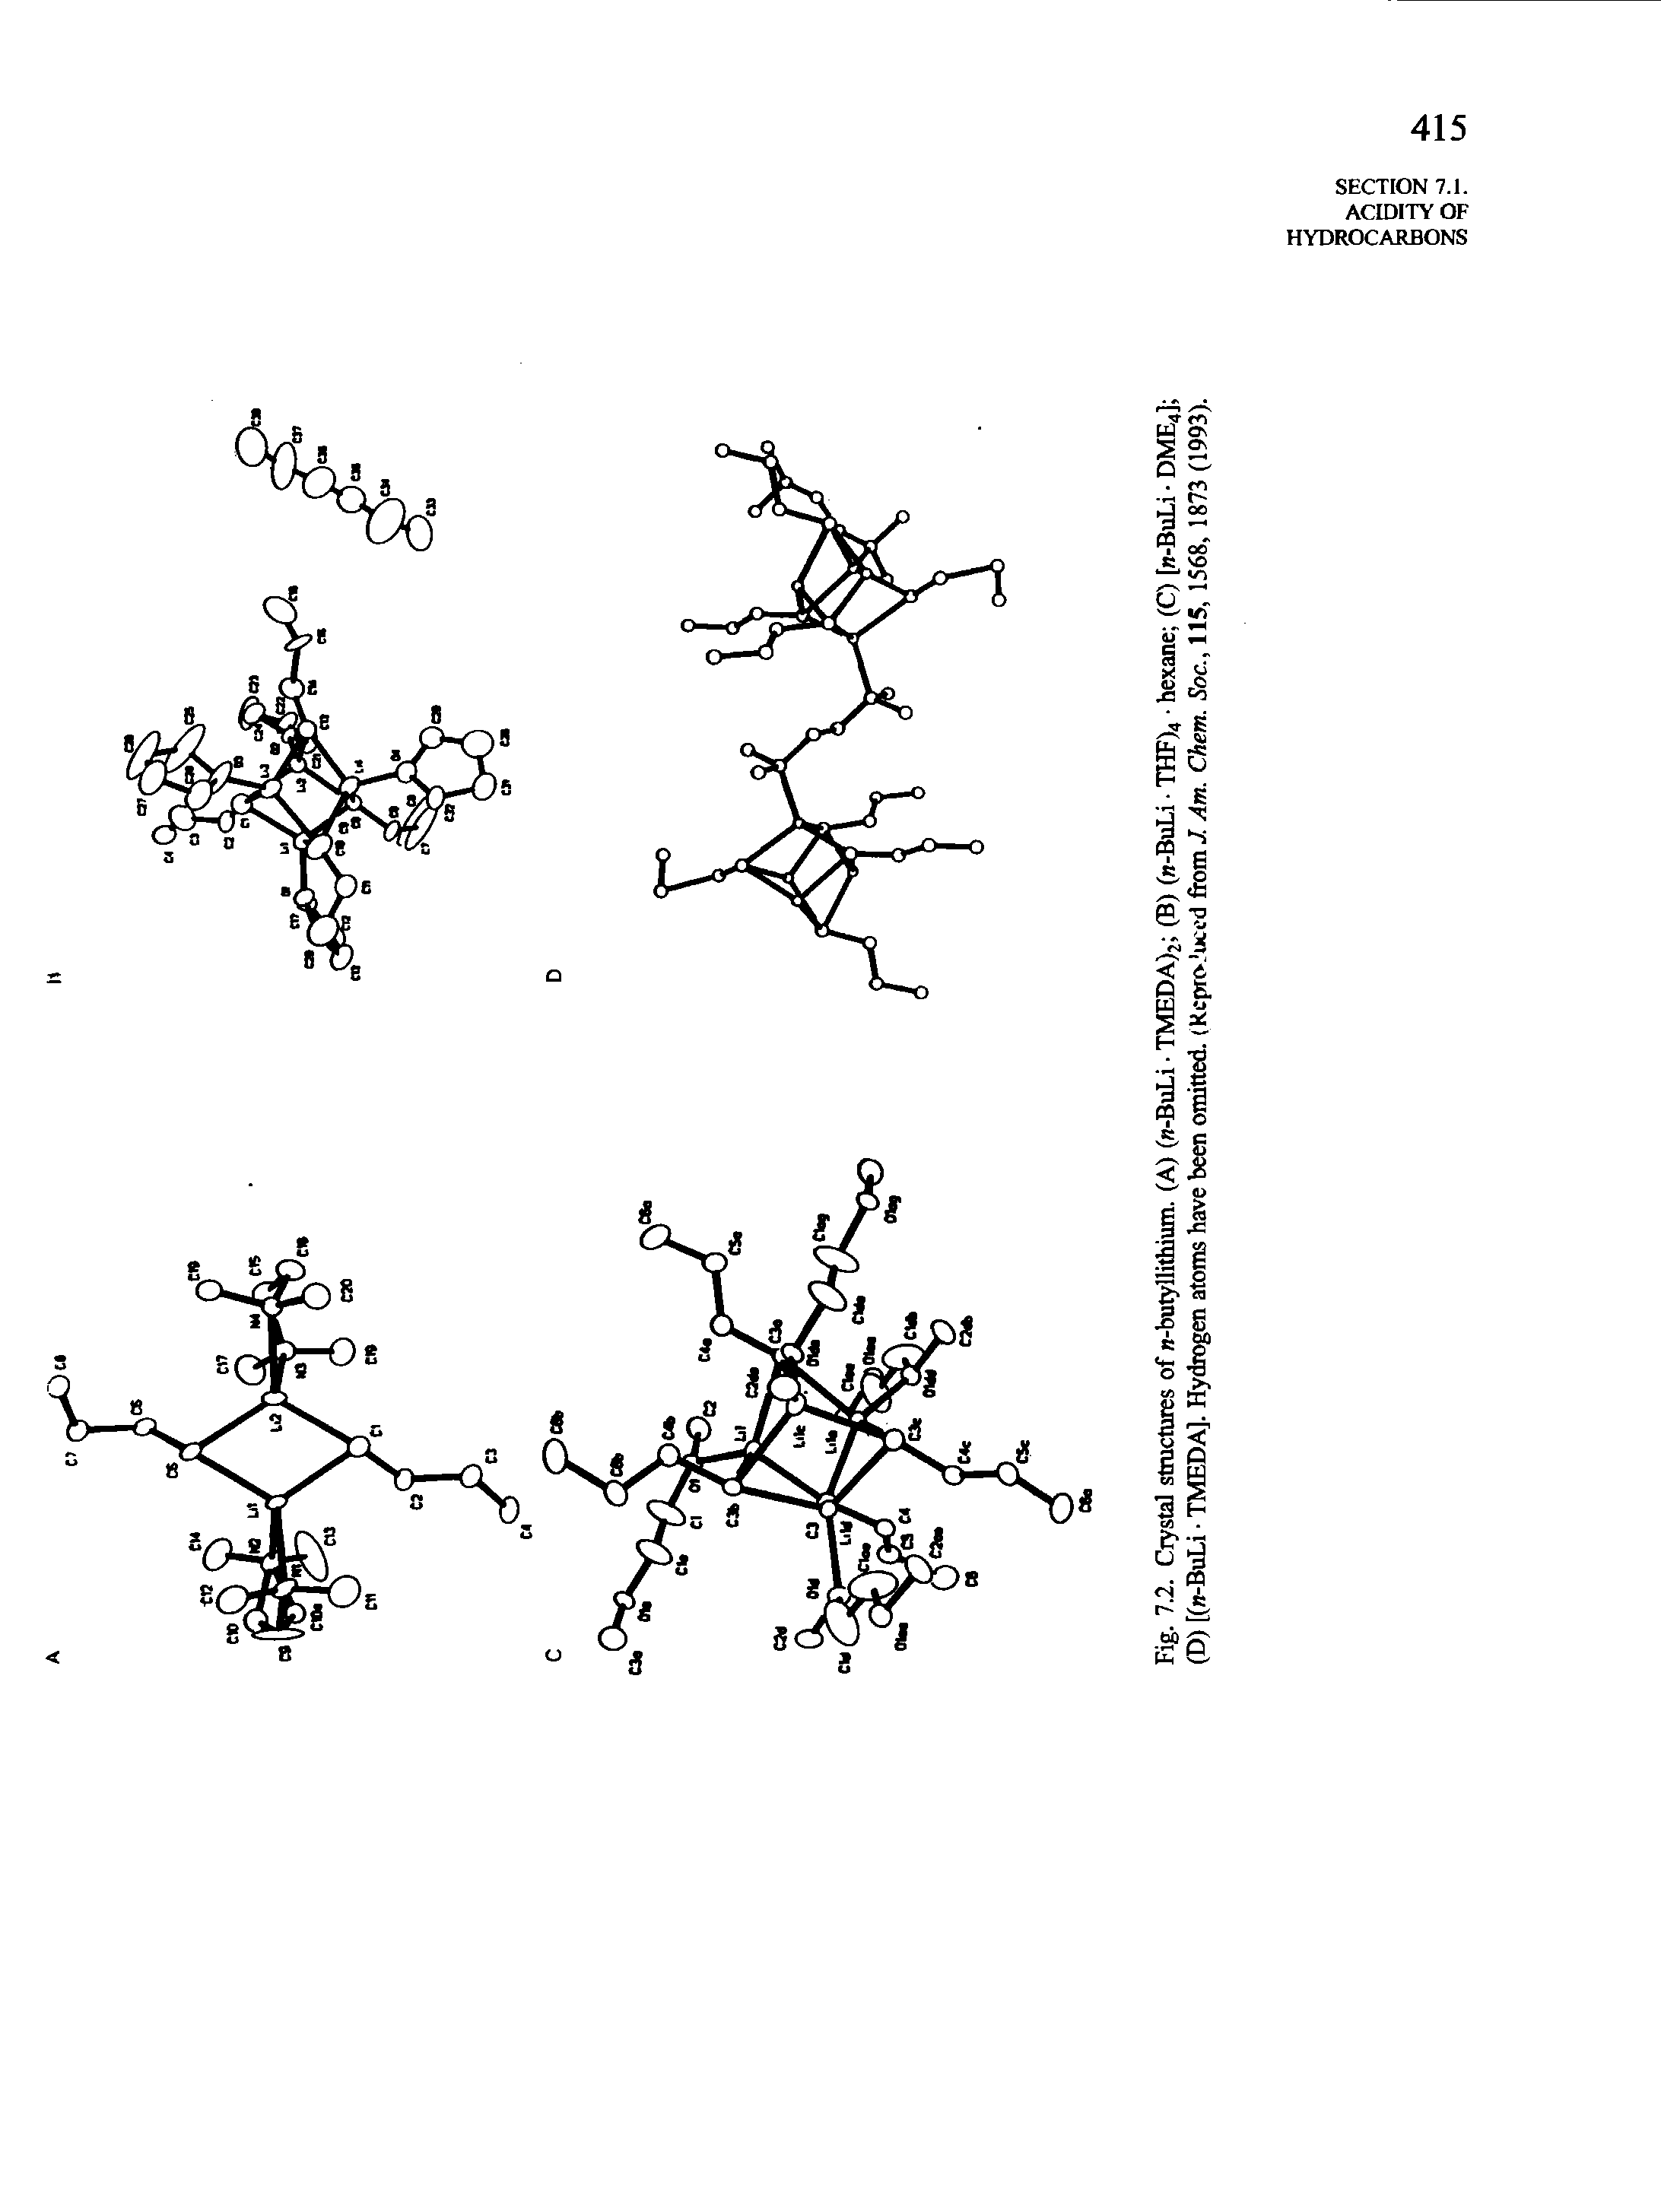 Fig. 7.2. Crystal structures of n-butyllithium. (A) (n-BuLi TMEDA)2 (B) (n-BuLi THF)4 hexane (C) [n-BuLi DME4] (D) [(n-BuLi TMEDA]. Hydrogen atoms have been omitted. (RcprcvJuccd from./ Am. Chem. Soc., 115, 1568, 1873 (1993).